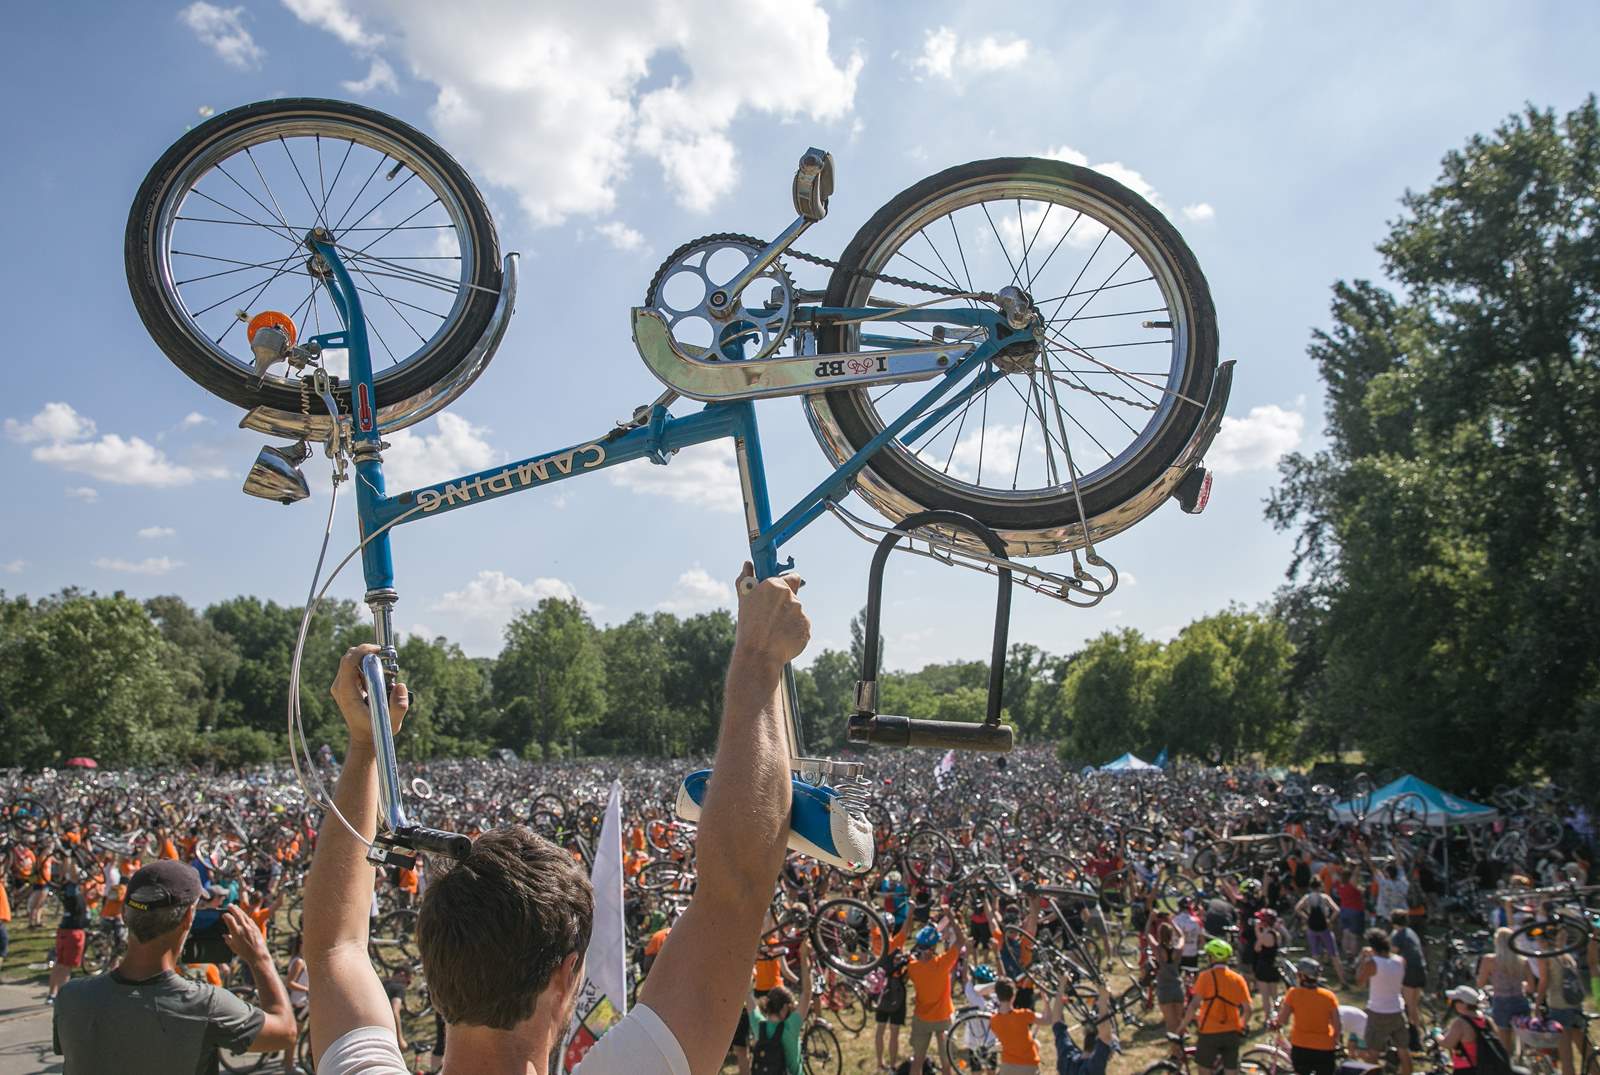 I bike Budapest biciklis felvonulás 2021